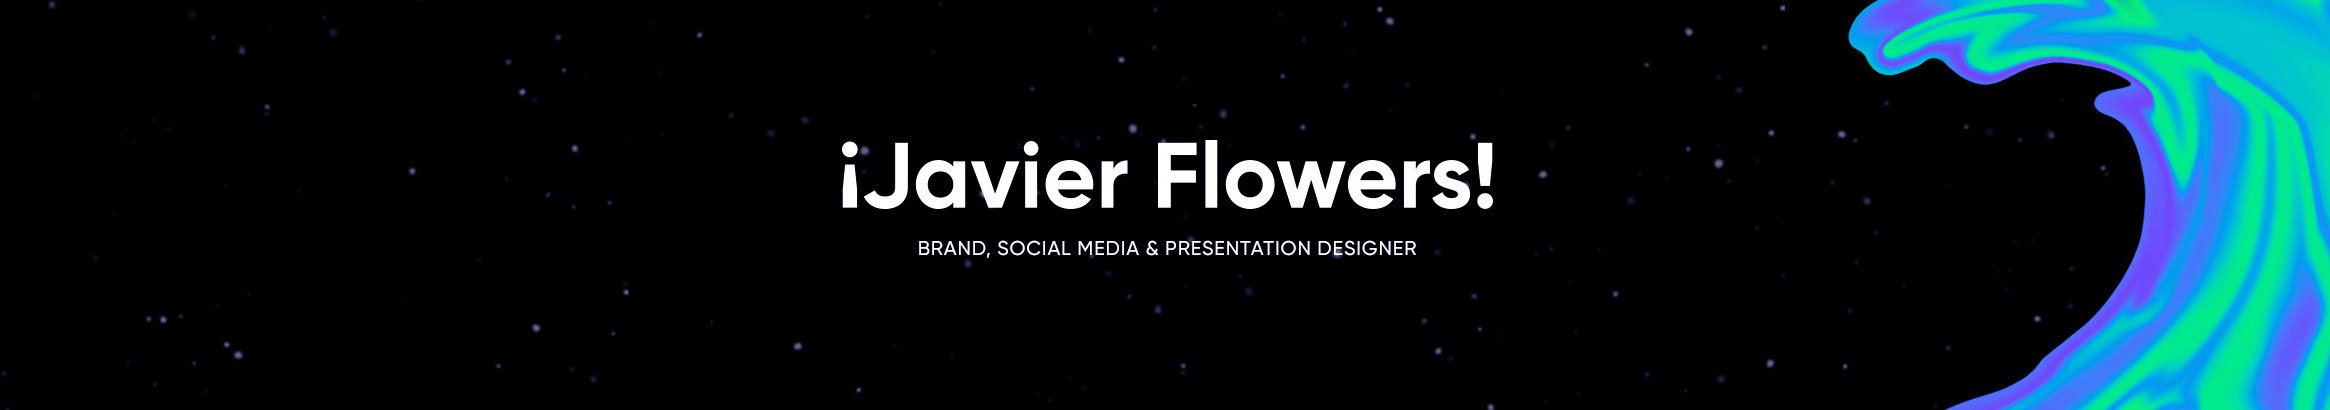 ¡Javier Flowers!'s profile banner